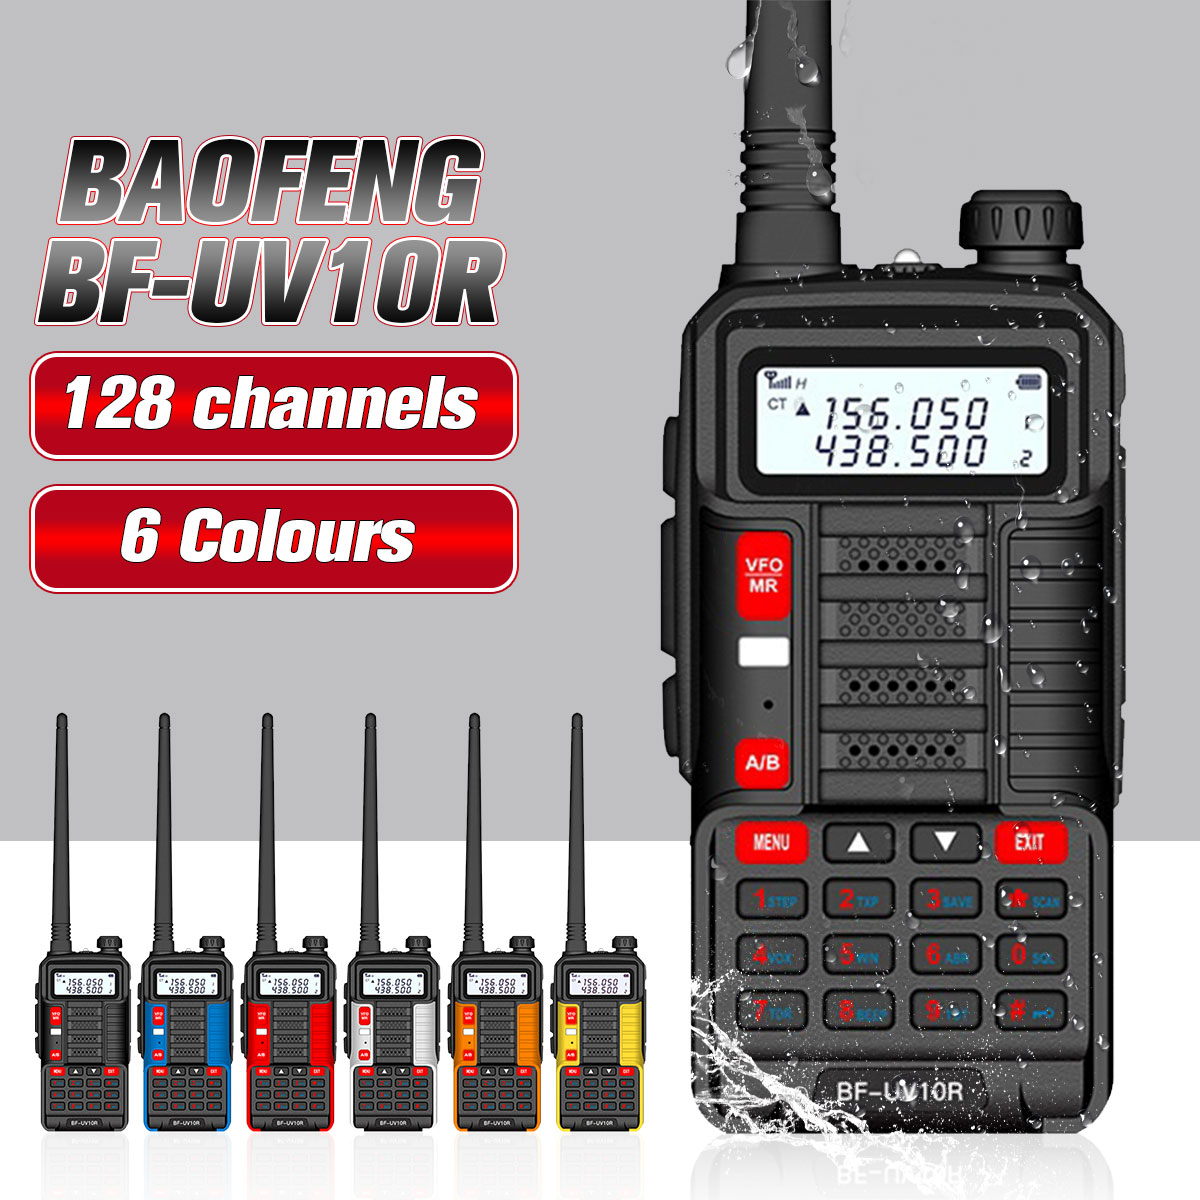 BAOFENG-BF-UV10R-10W-8800mAh-Walkie-Talkie-Waterproof-5-15KM-128-Channel-Dual-Band-Two-Way-Radio-Out-1856913-1